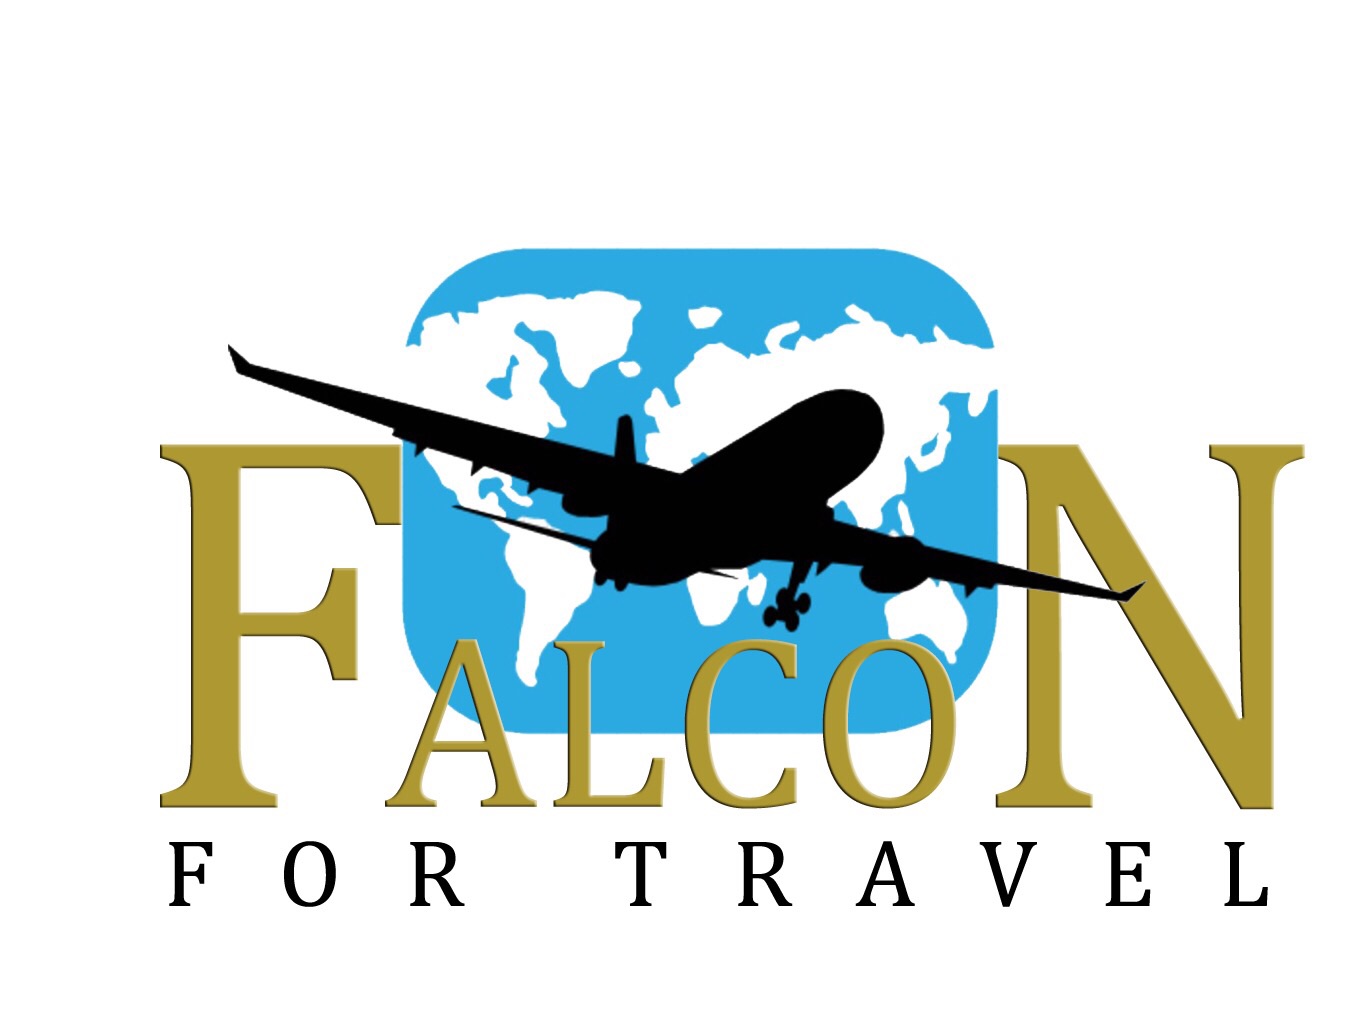 Falconfortravel's Logo